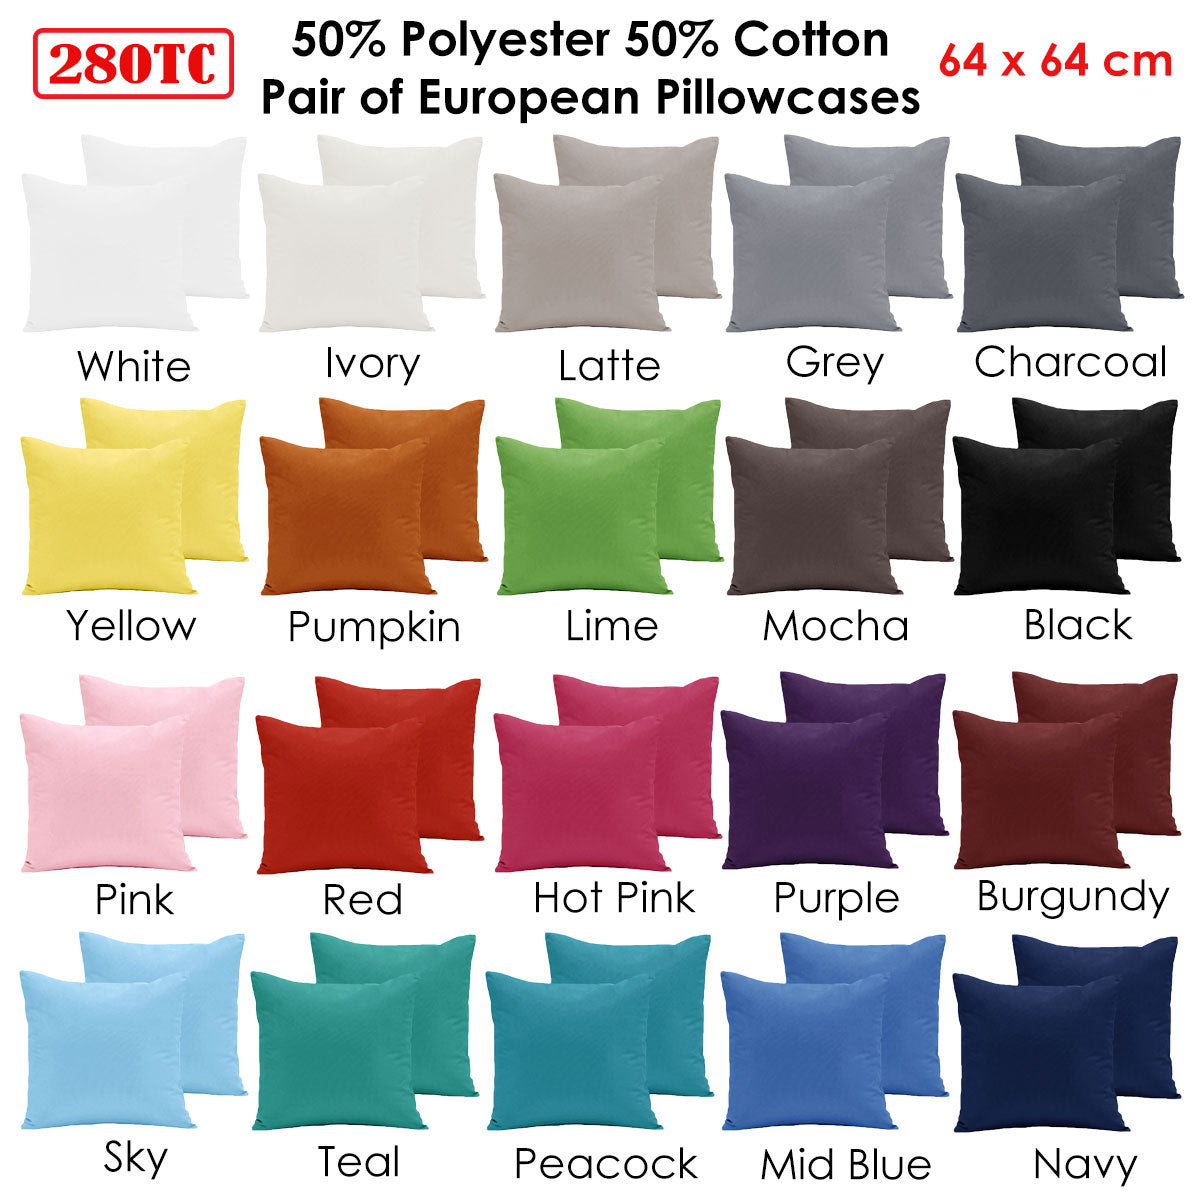 Pair of  280TC Polyester Cotton European Pillowcases Red